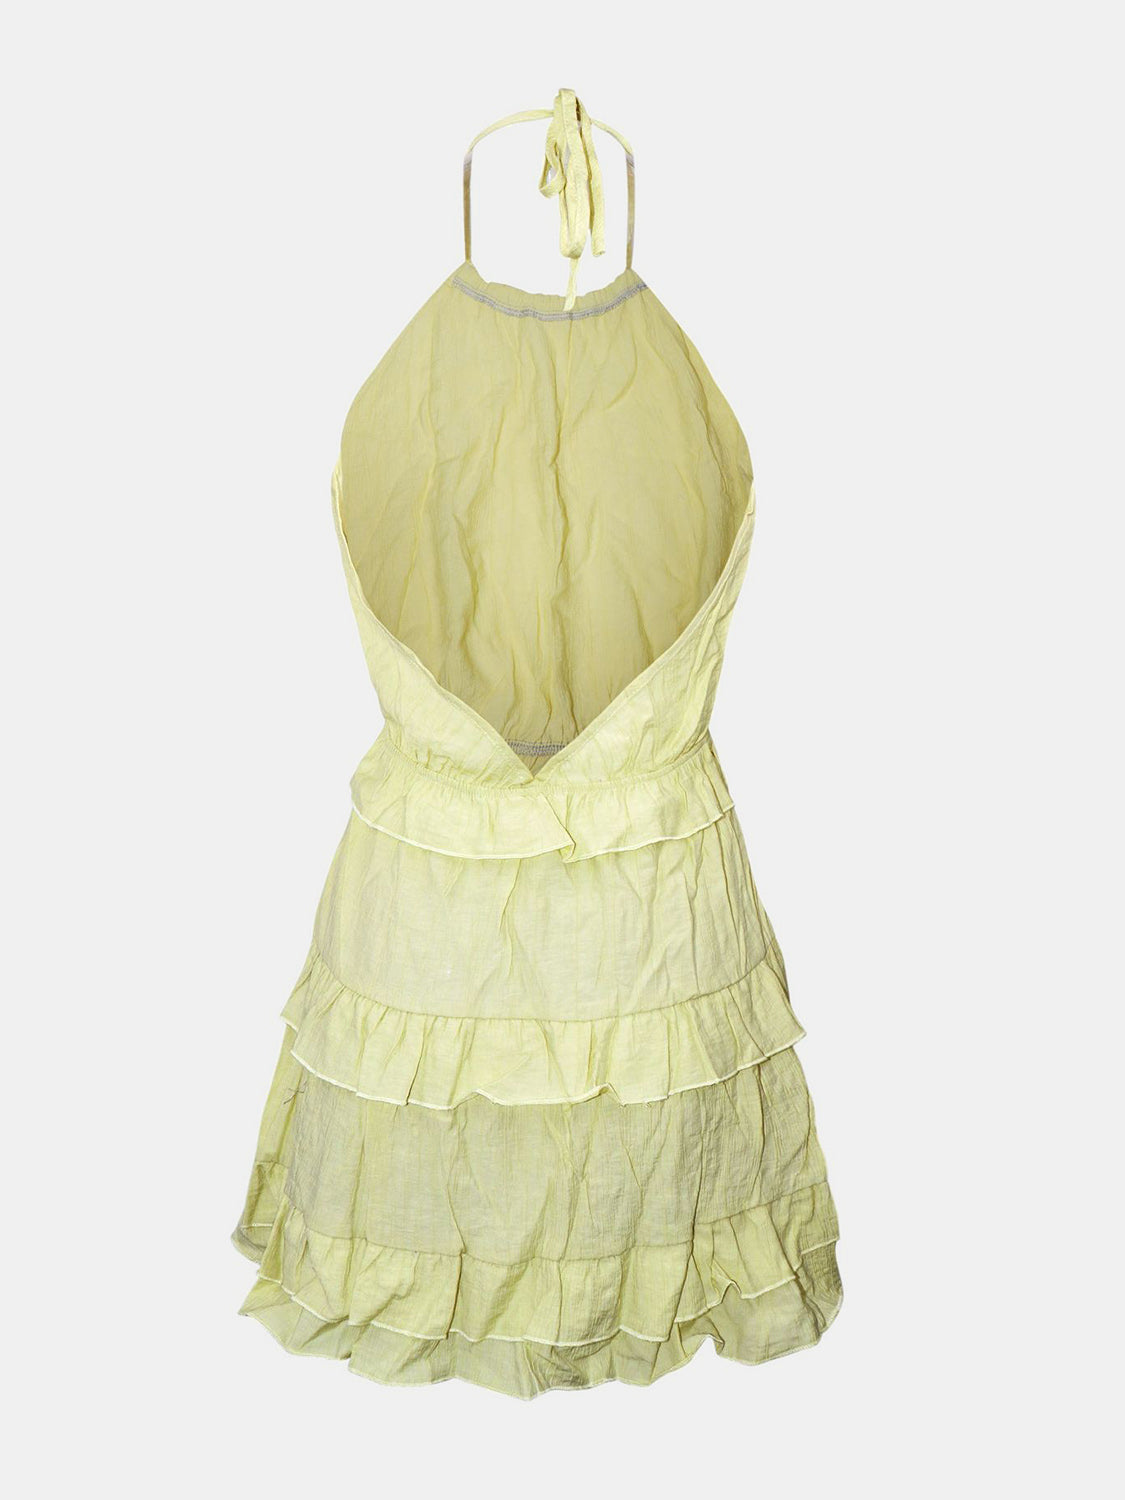 Green Halter Neck Mini Dress Ruffle Skirt Backless Sexy Spring and Summer Dress